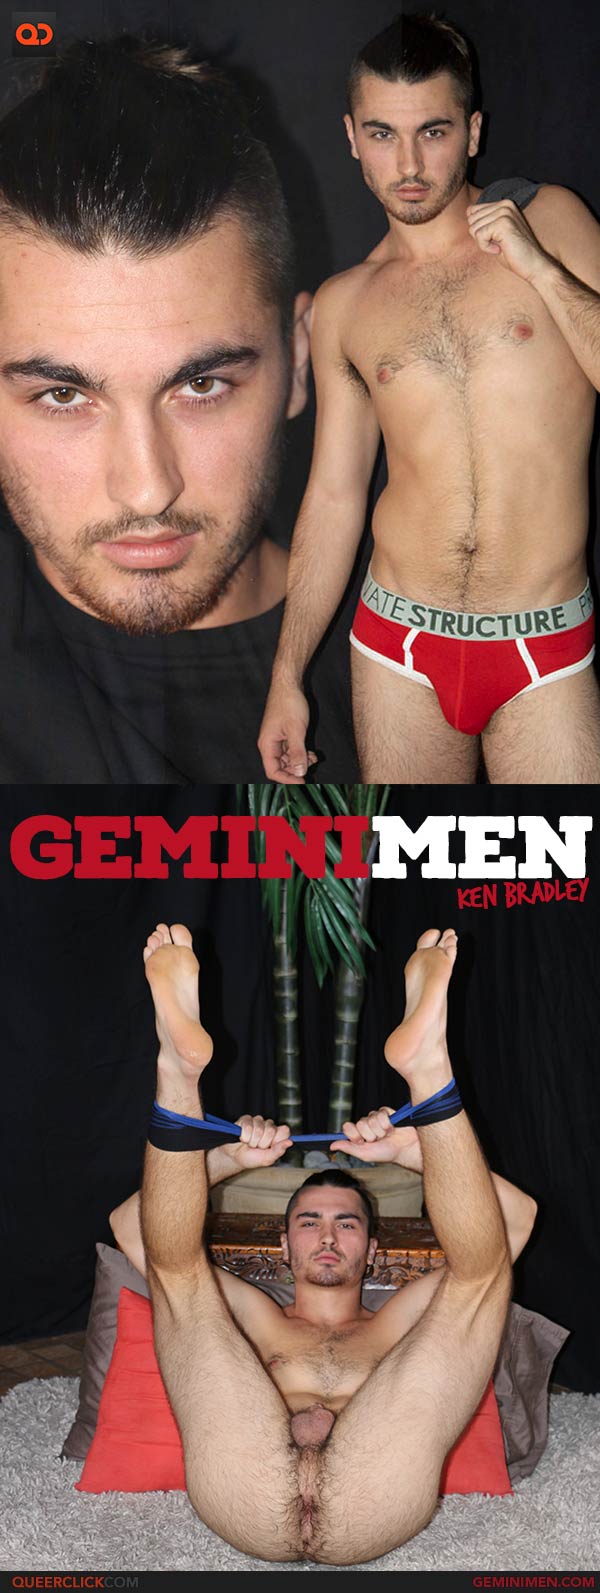 Gemini Men: Ken Bradley